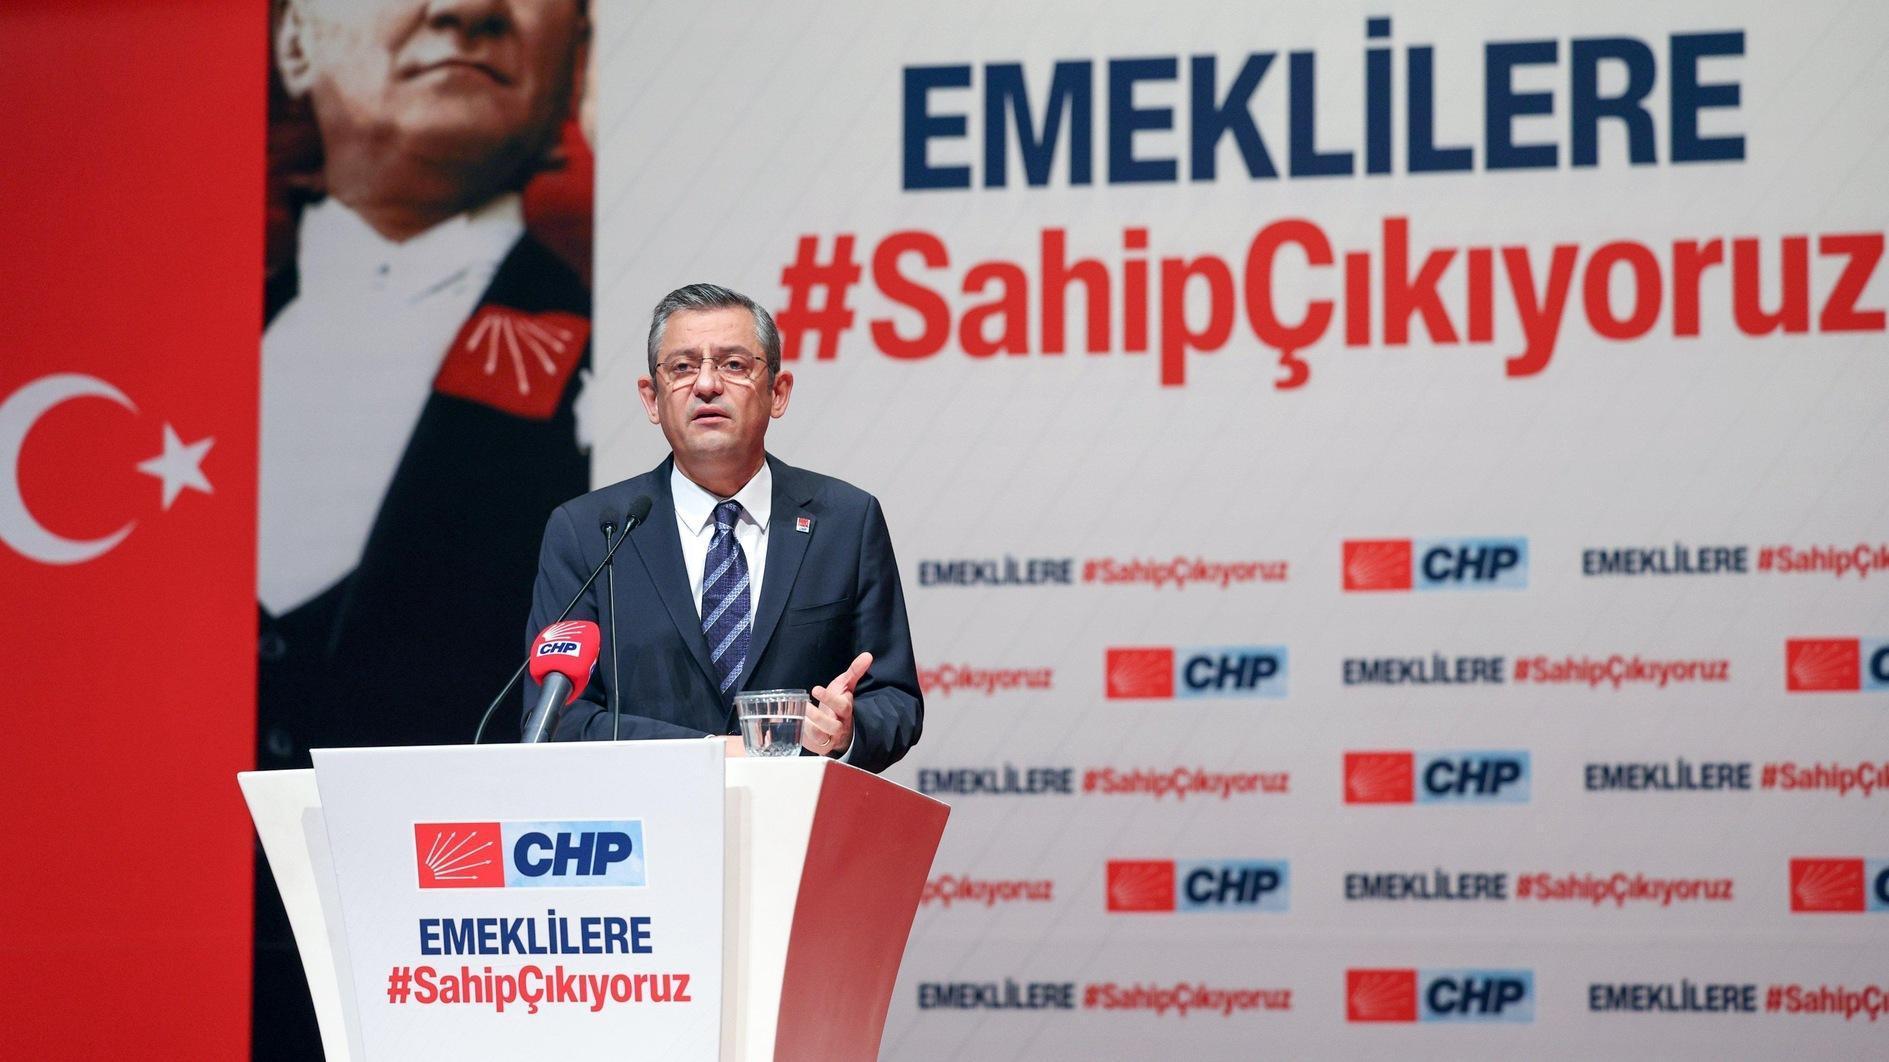 CHP-leider roept op tot verhoging van het laagste pensioen